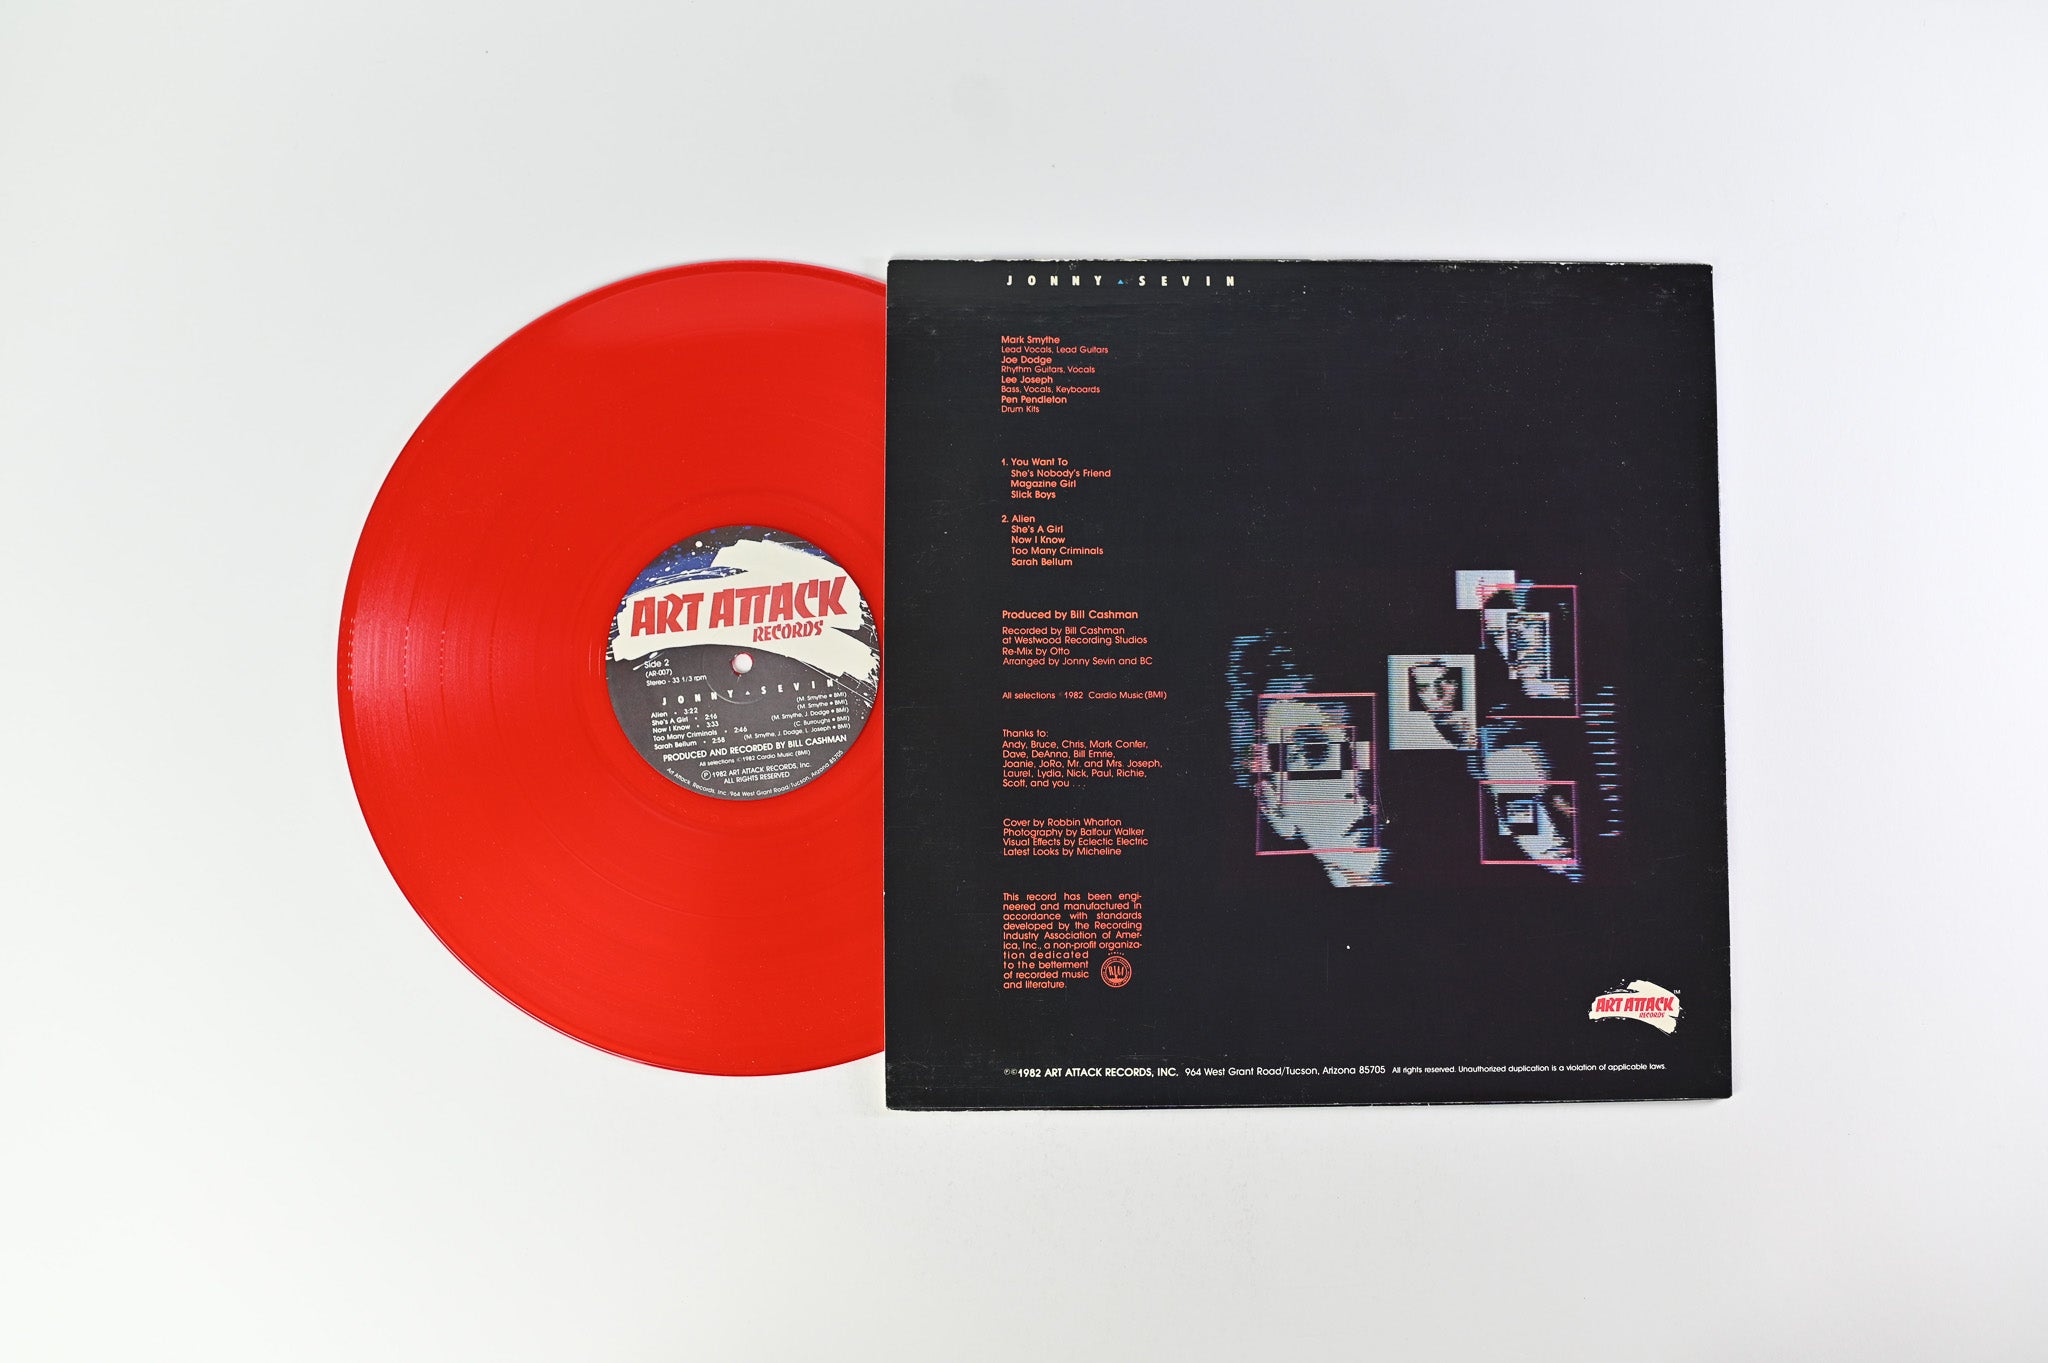 Jonny Sevin - Johnny Sevin on Art Attack Ltd Red Vinyl